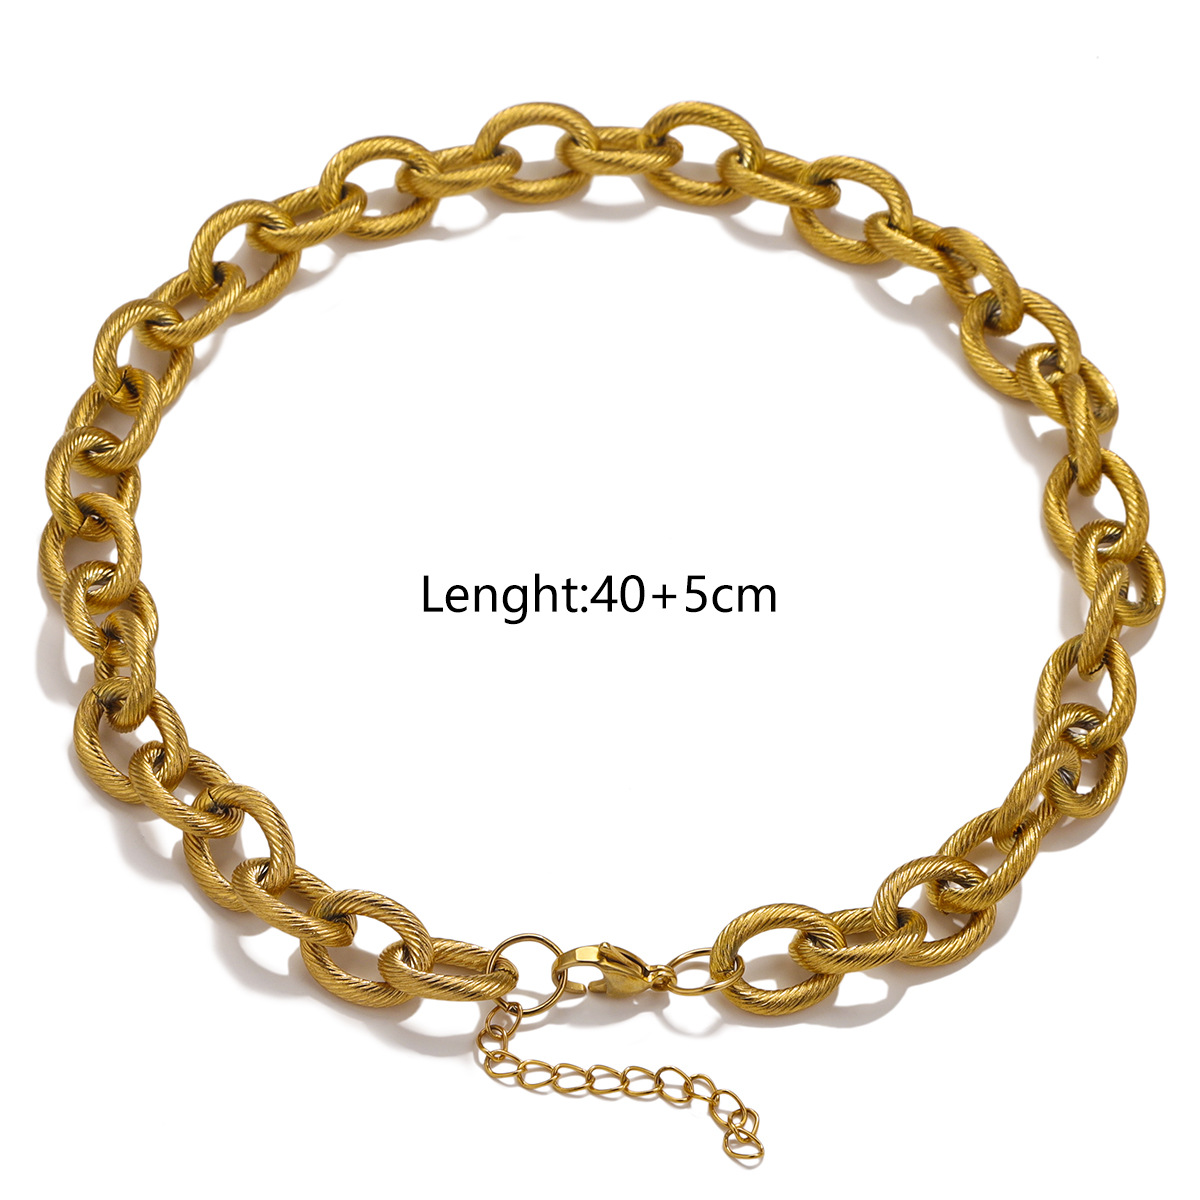 4:Gold necklace - 40cm tail chain 5cm